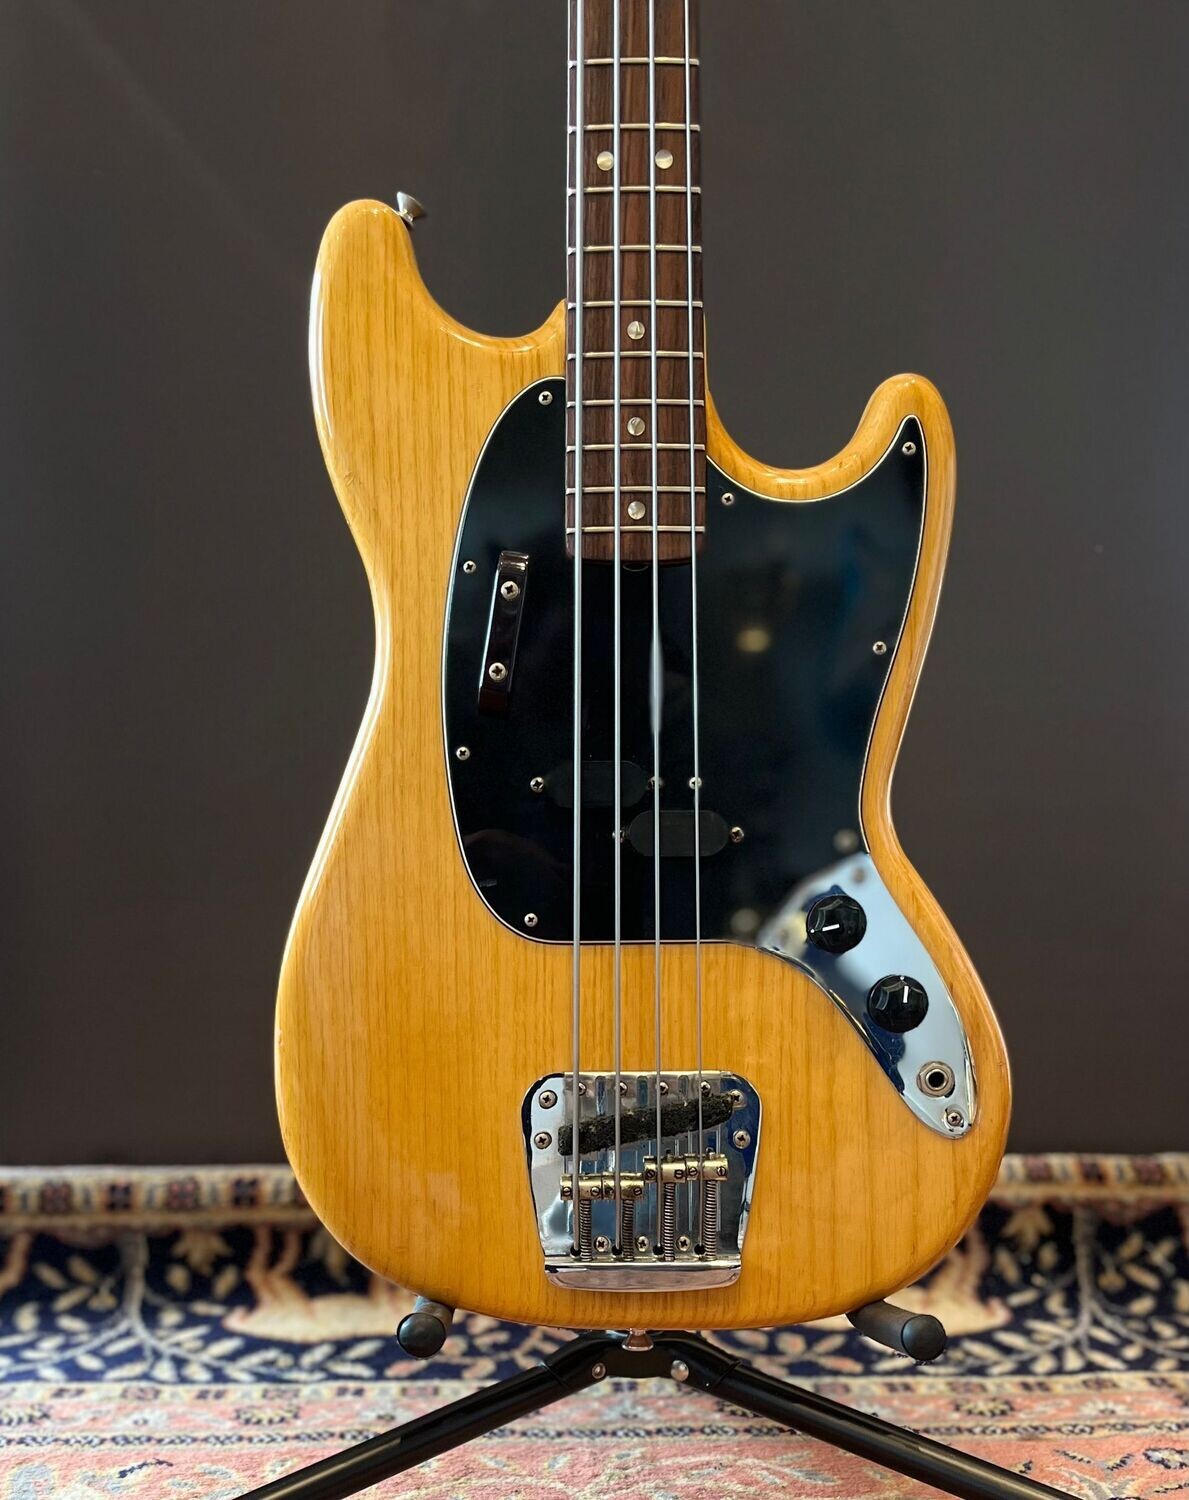 1977 Fender Mustang Bass - rosewood fretboard